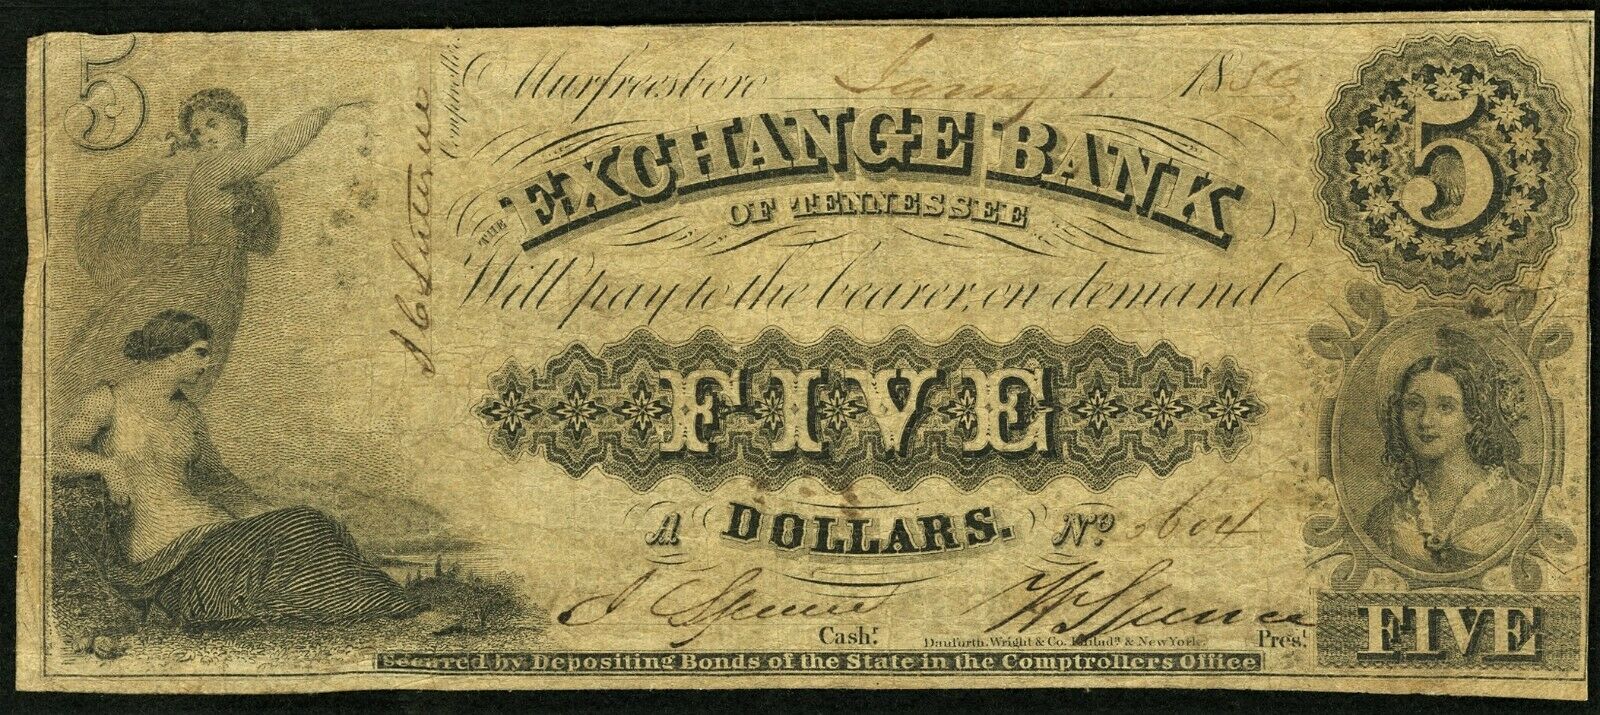 1856 $5 Exchange Bank of Murfreesboro Face.jpg